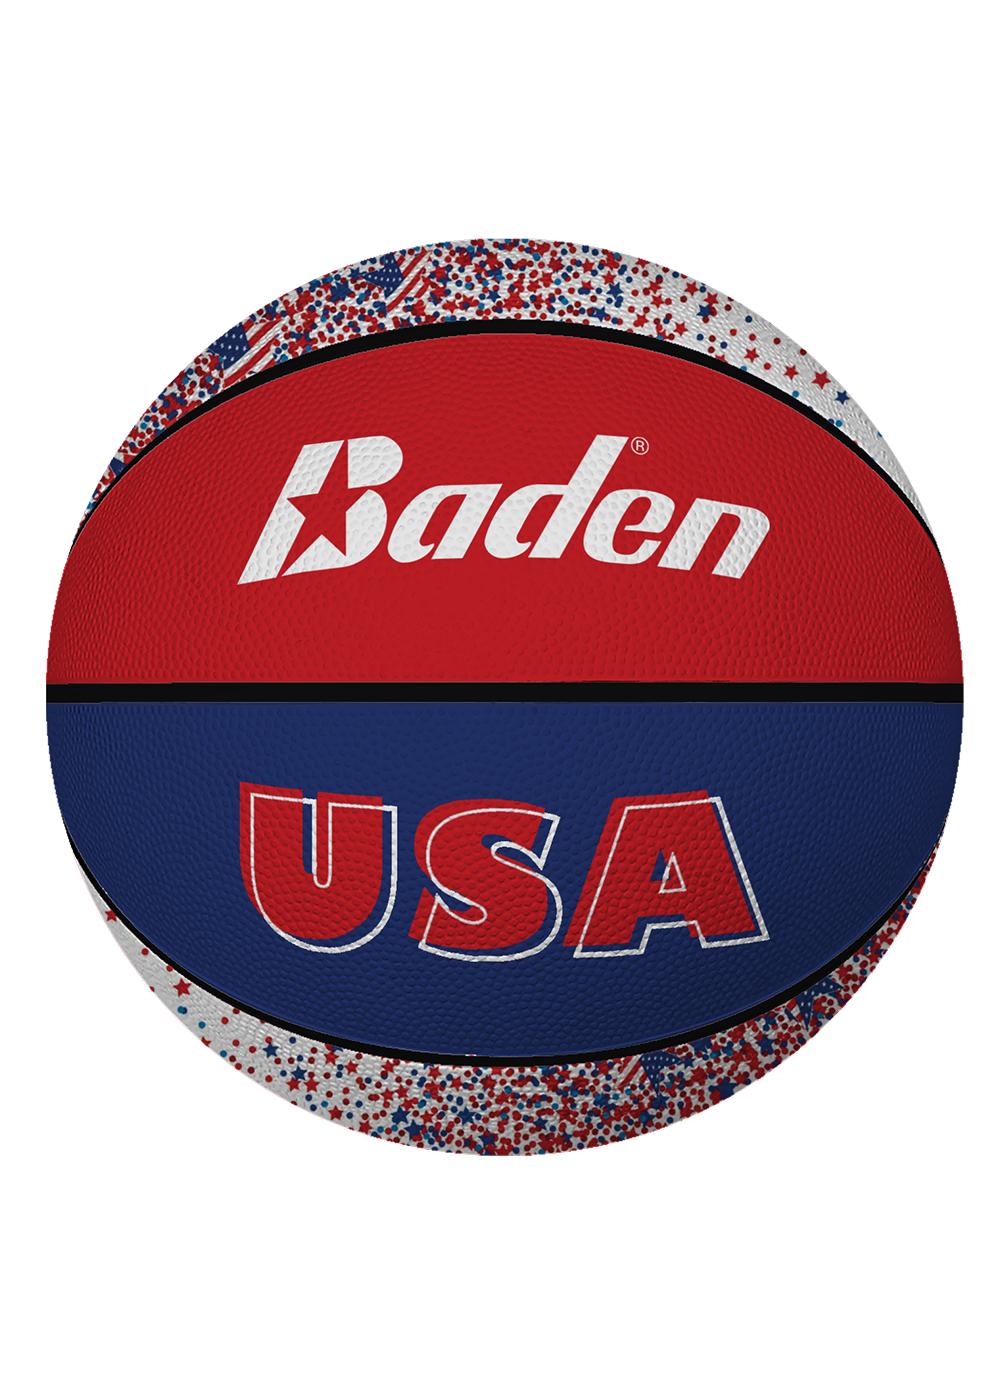 Baden Official Size Breakaway Basketball; image 1 of 2